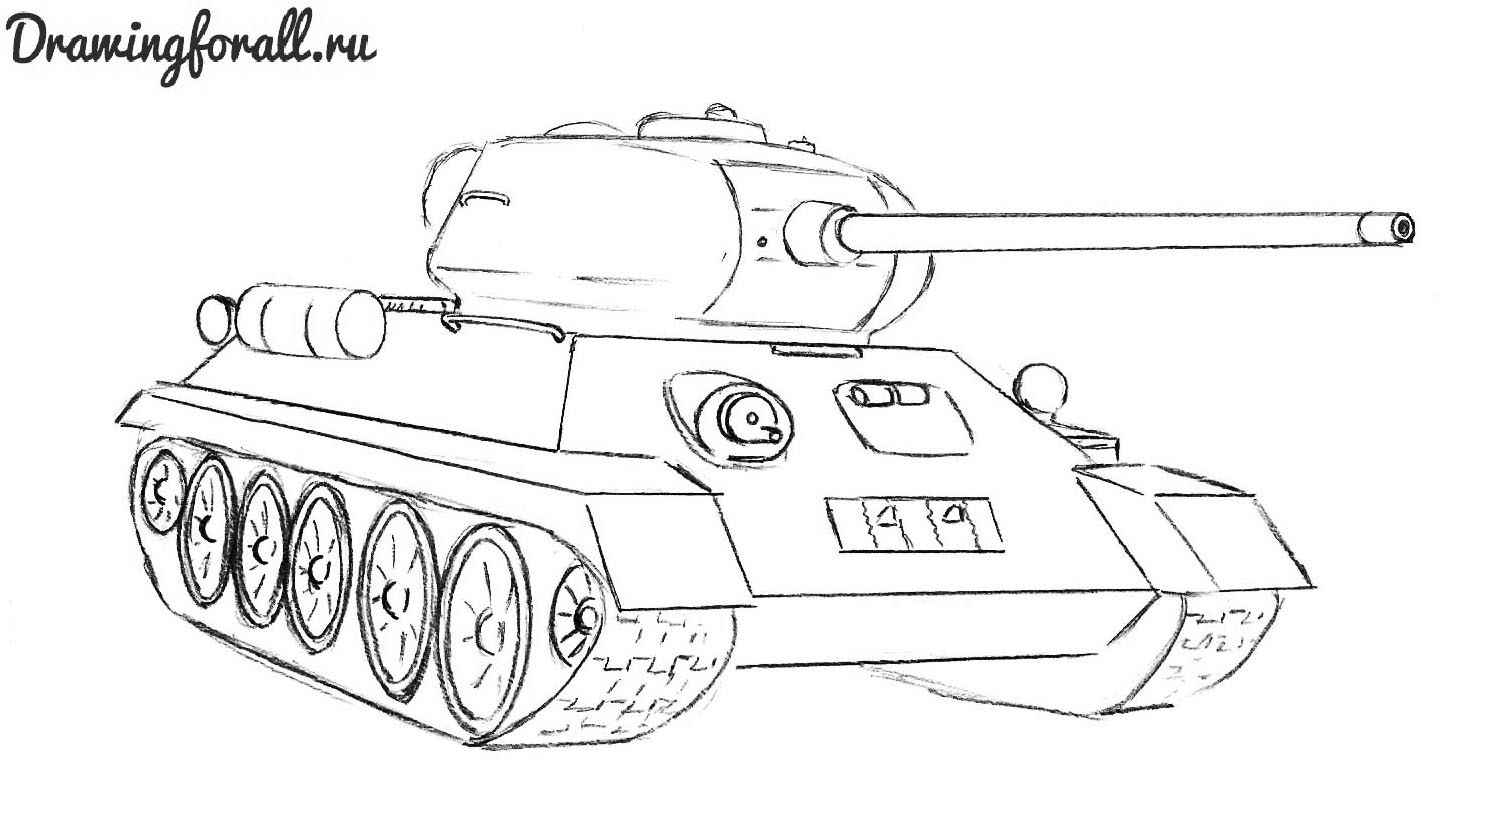 Нарисовать танк легко